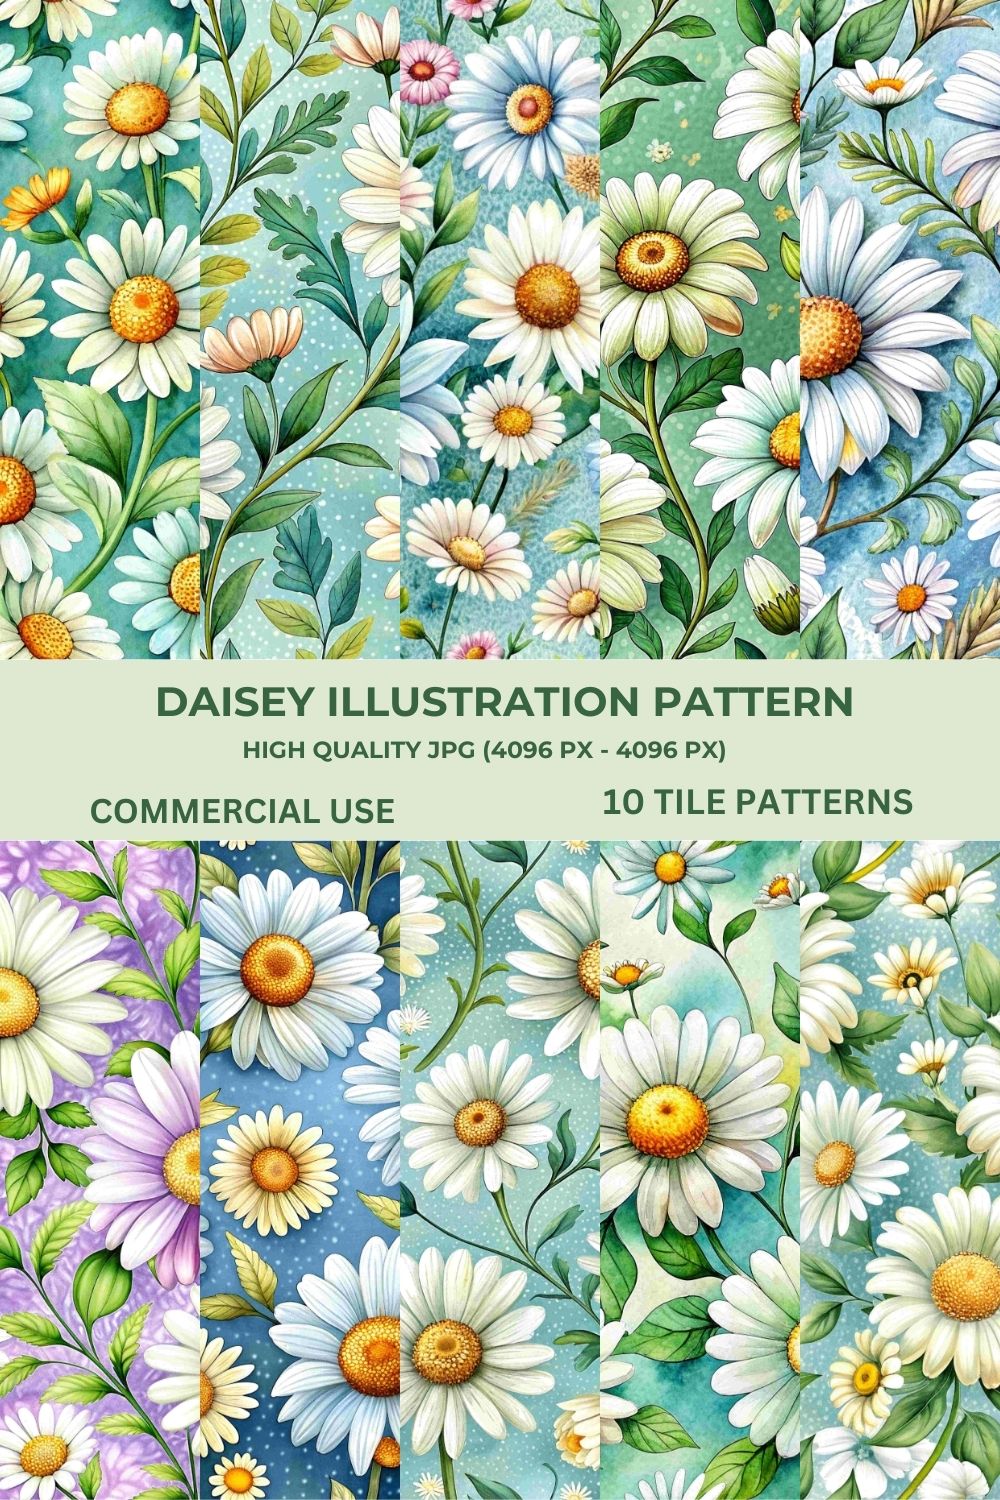 Daisy Illustration Pattern Bundle Vibrant Floral Designs pinterest preview image.